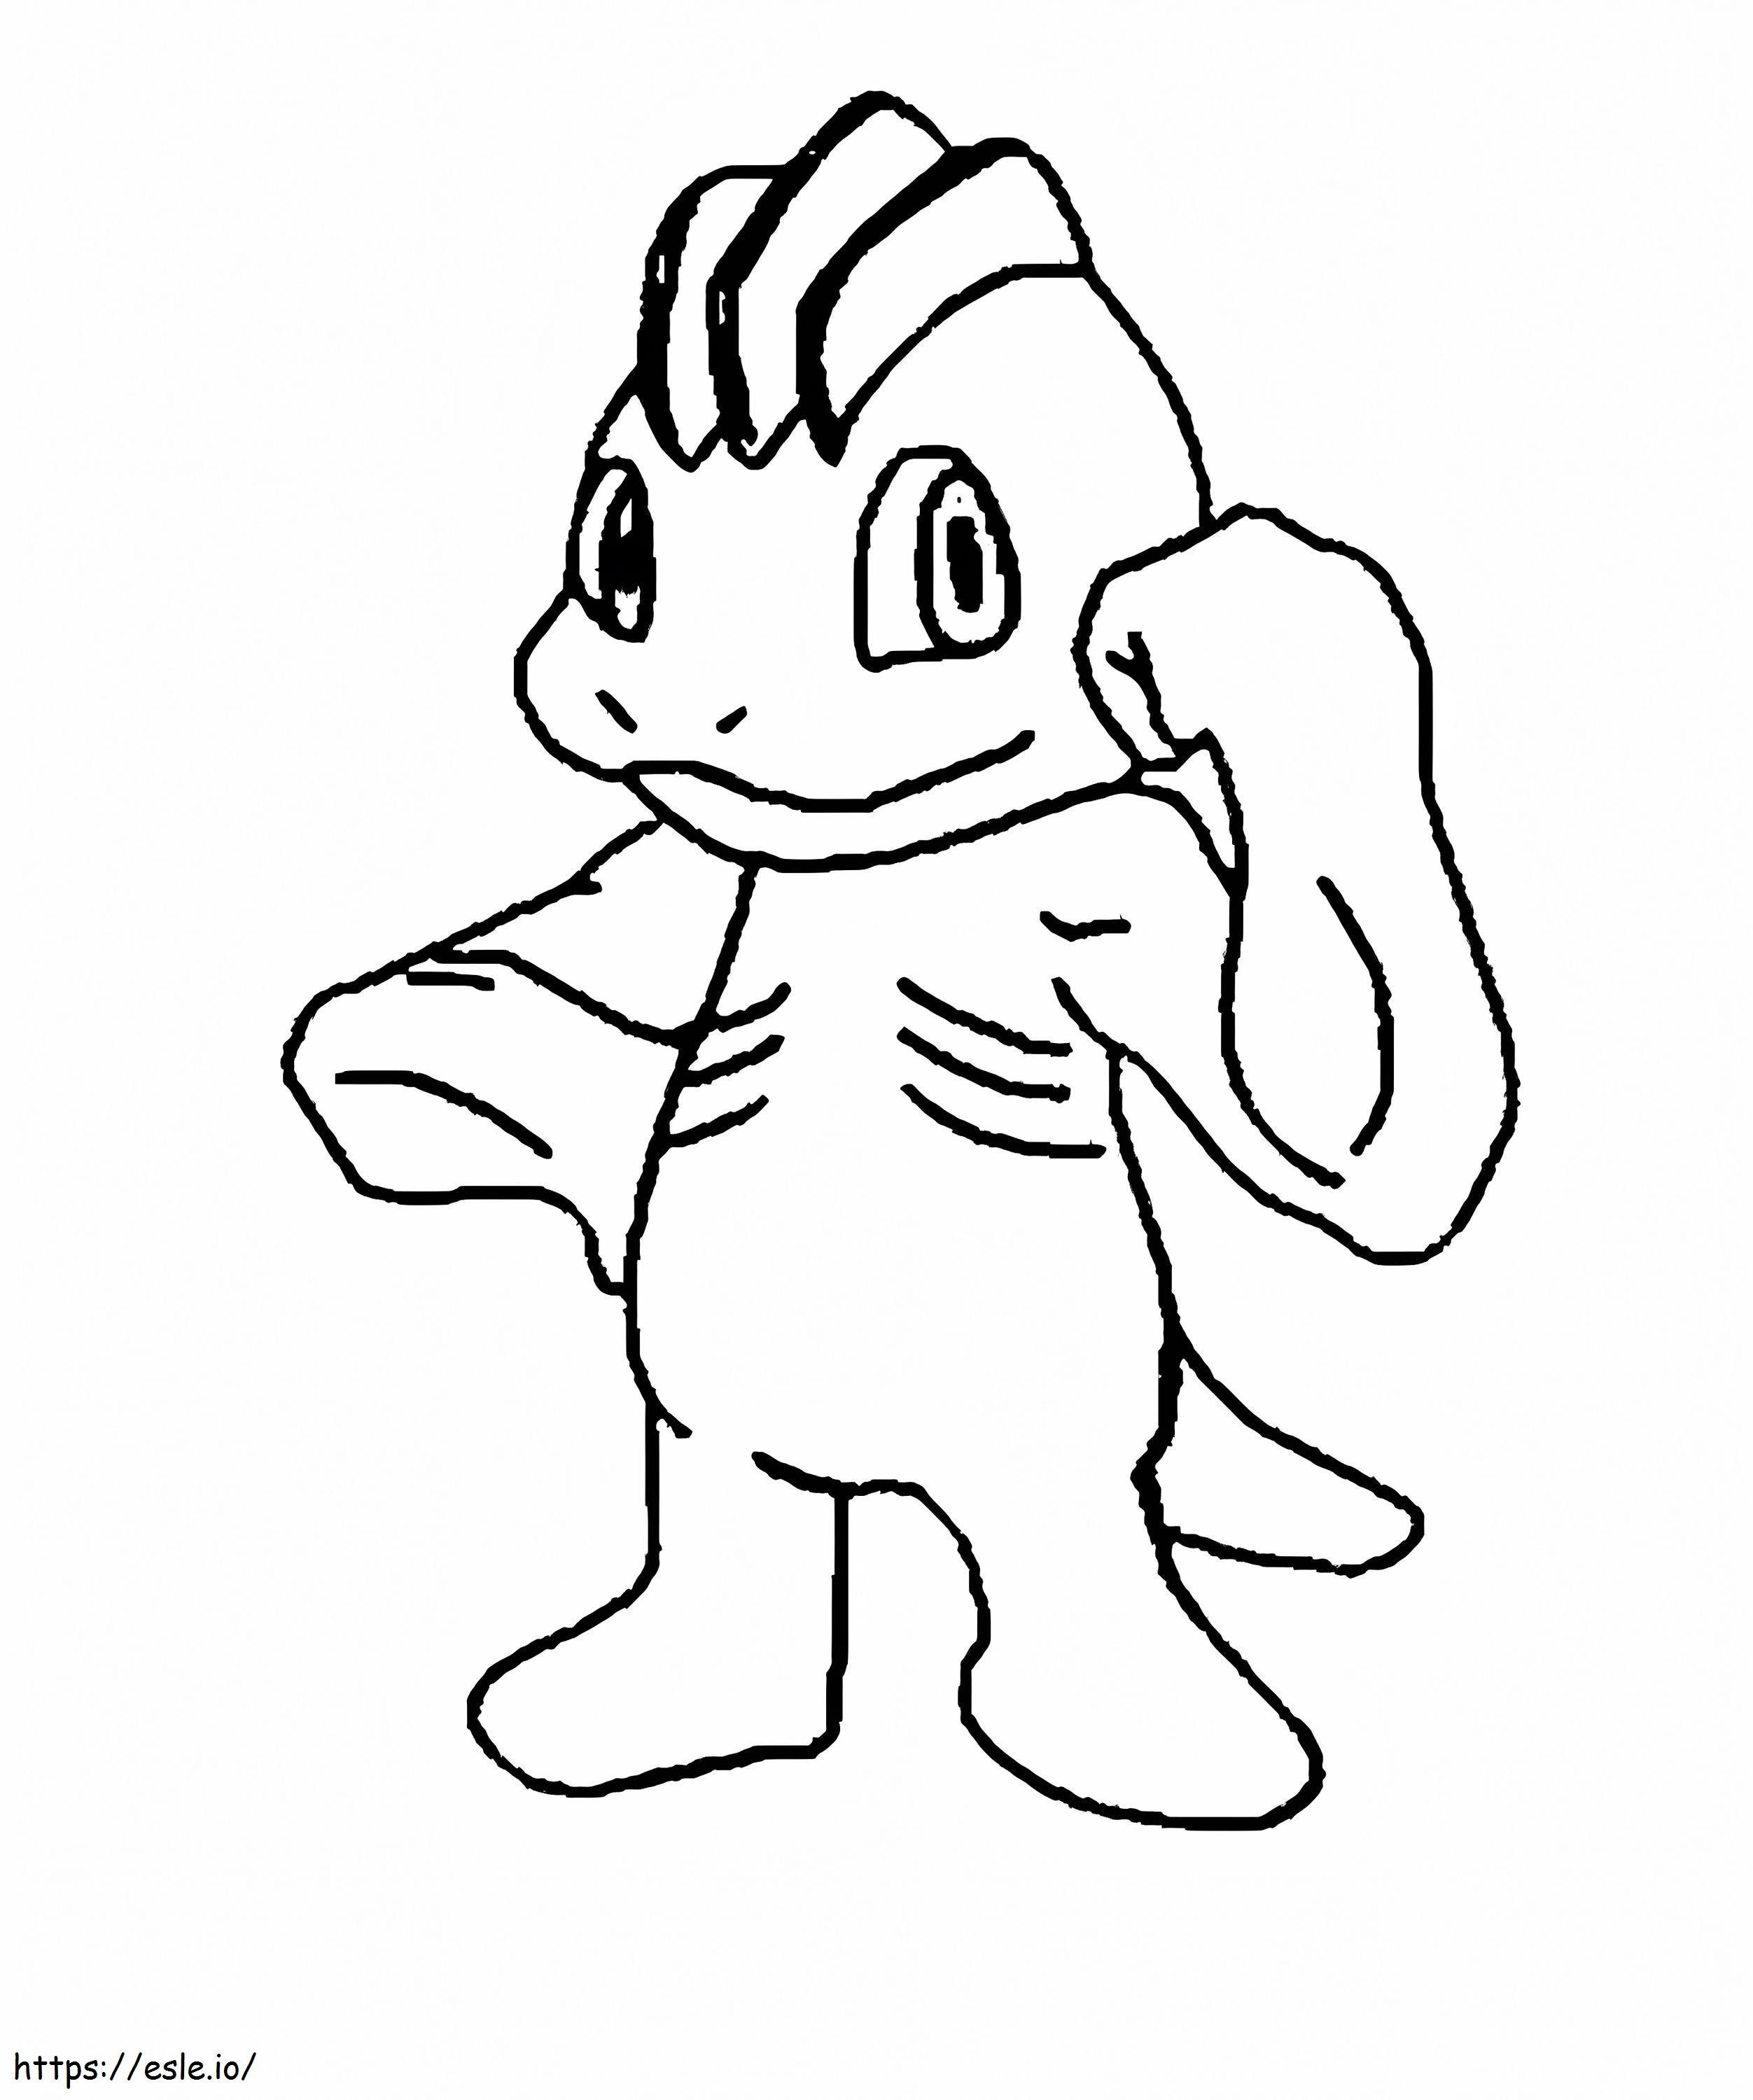 Machop A Pokemon coloring page